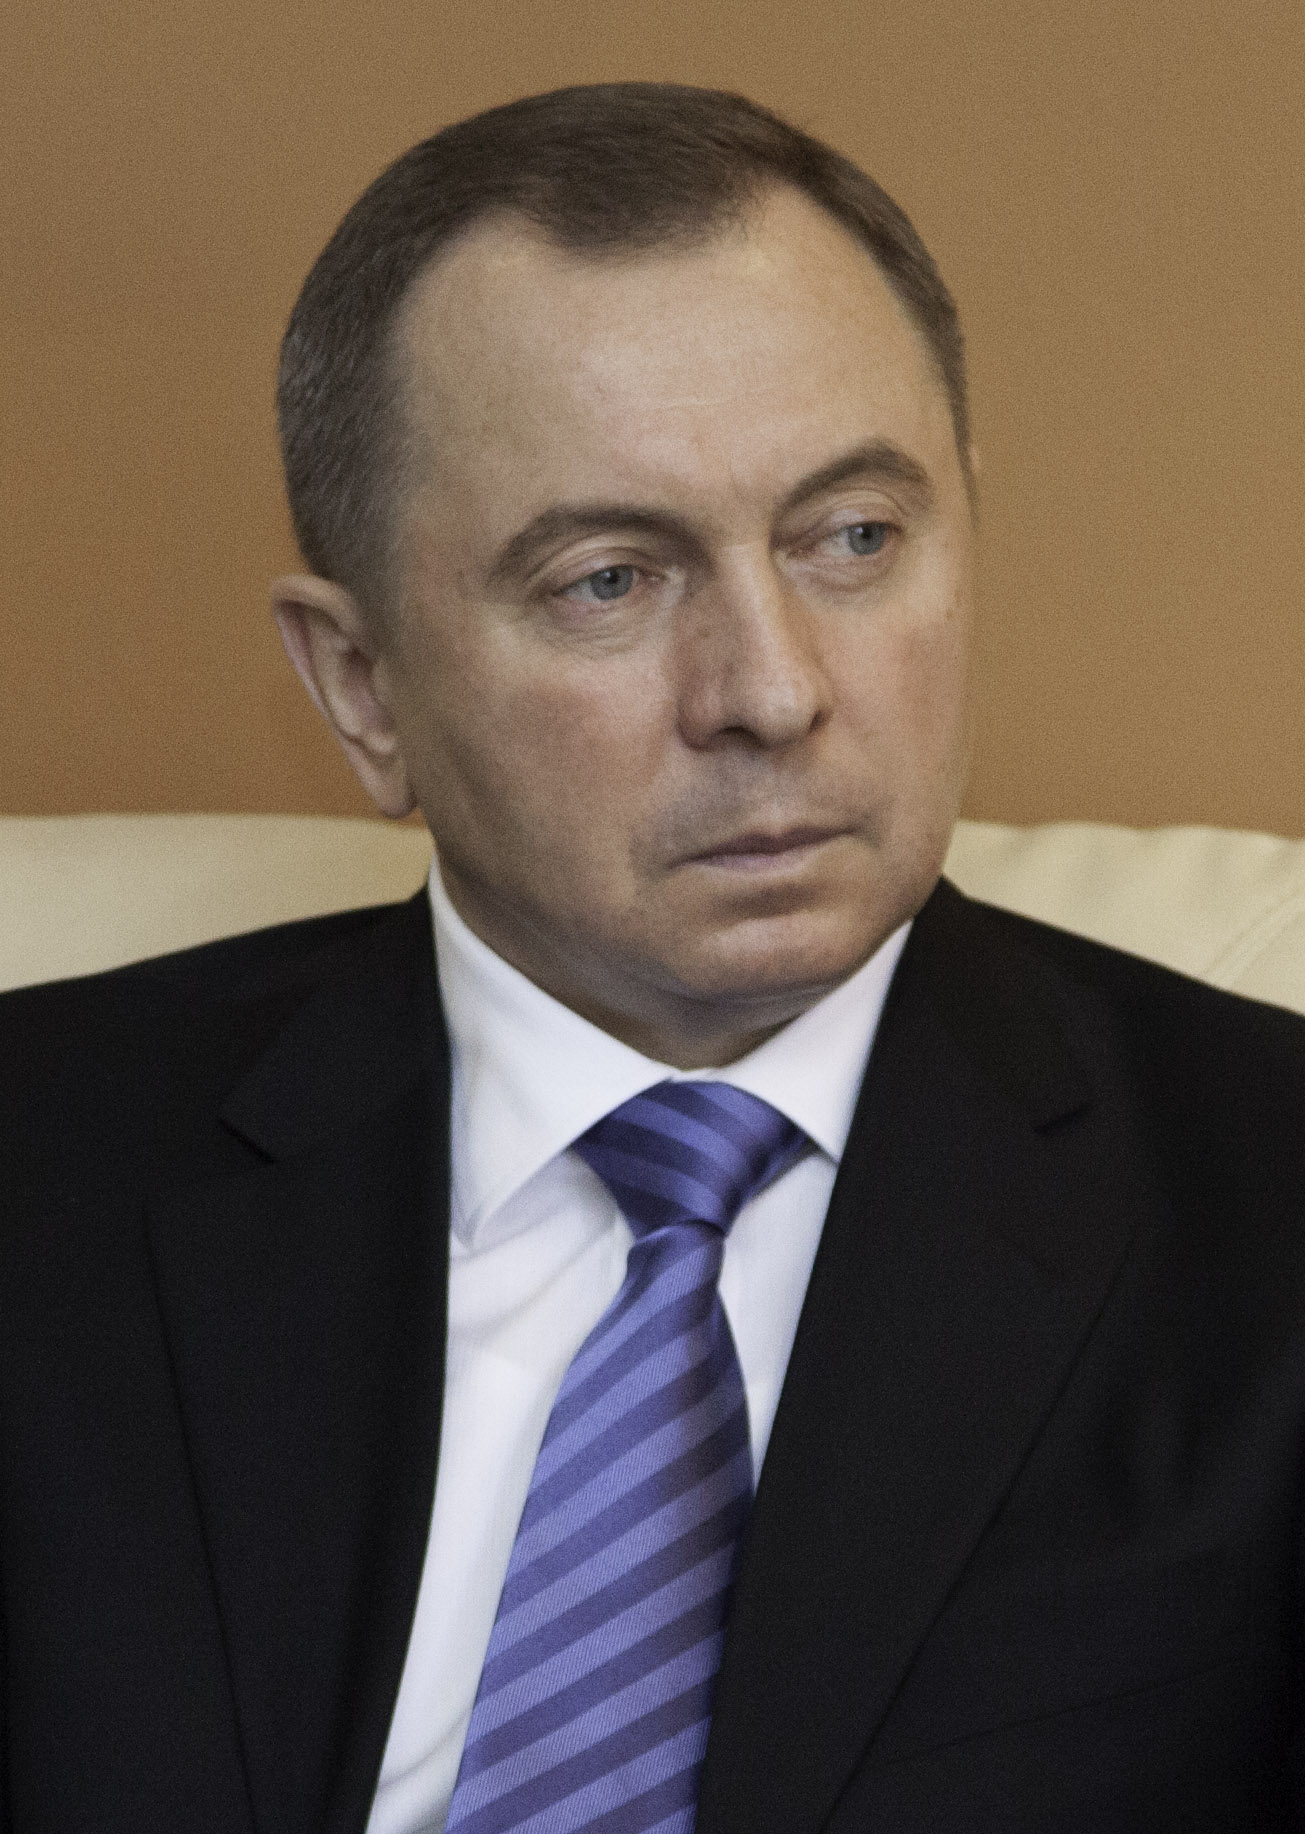 Belarus foreign minister Makei dies suddenly  - Belta